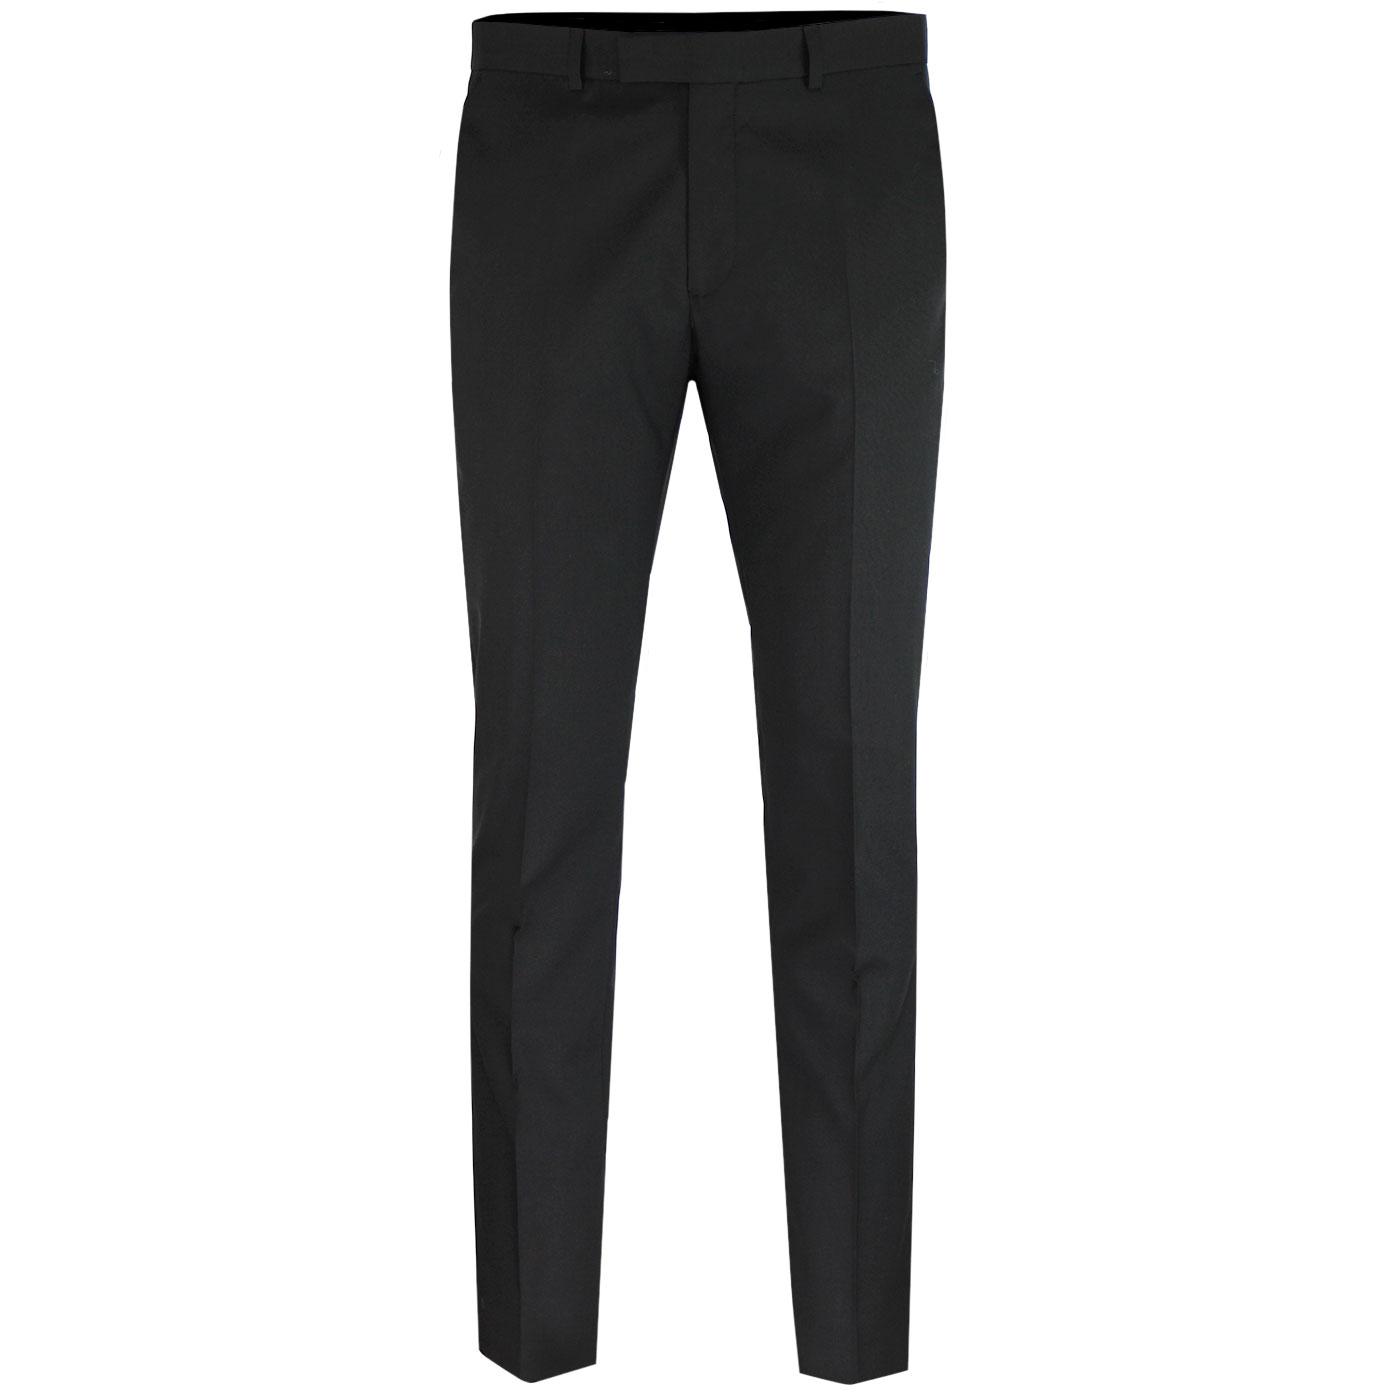 BEN SHERMAN Tailoring 1960s Mod Tonic Suit Trousers Black